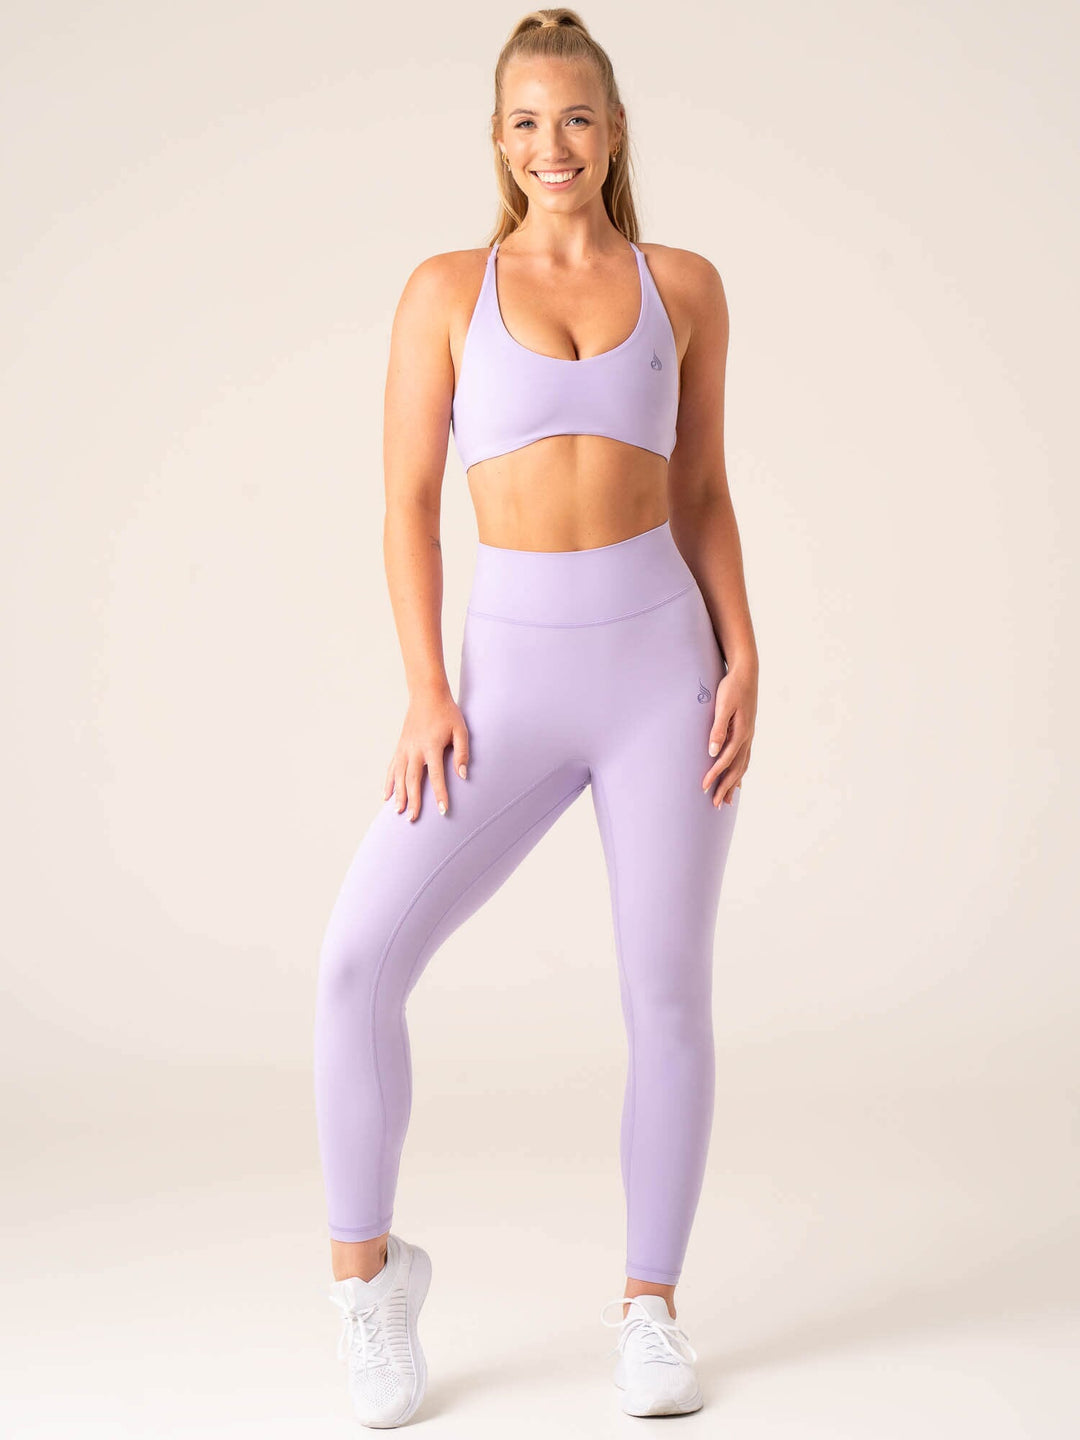 NKD Embody Sports Crop - Lavender Clothing Ryderwear 